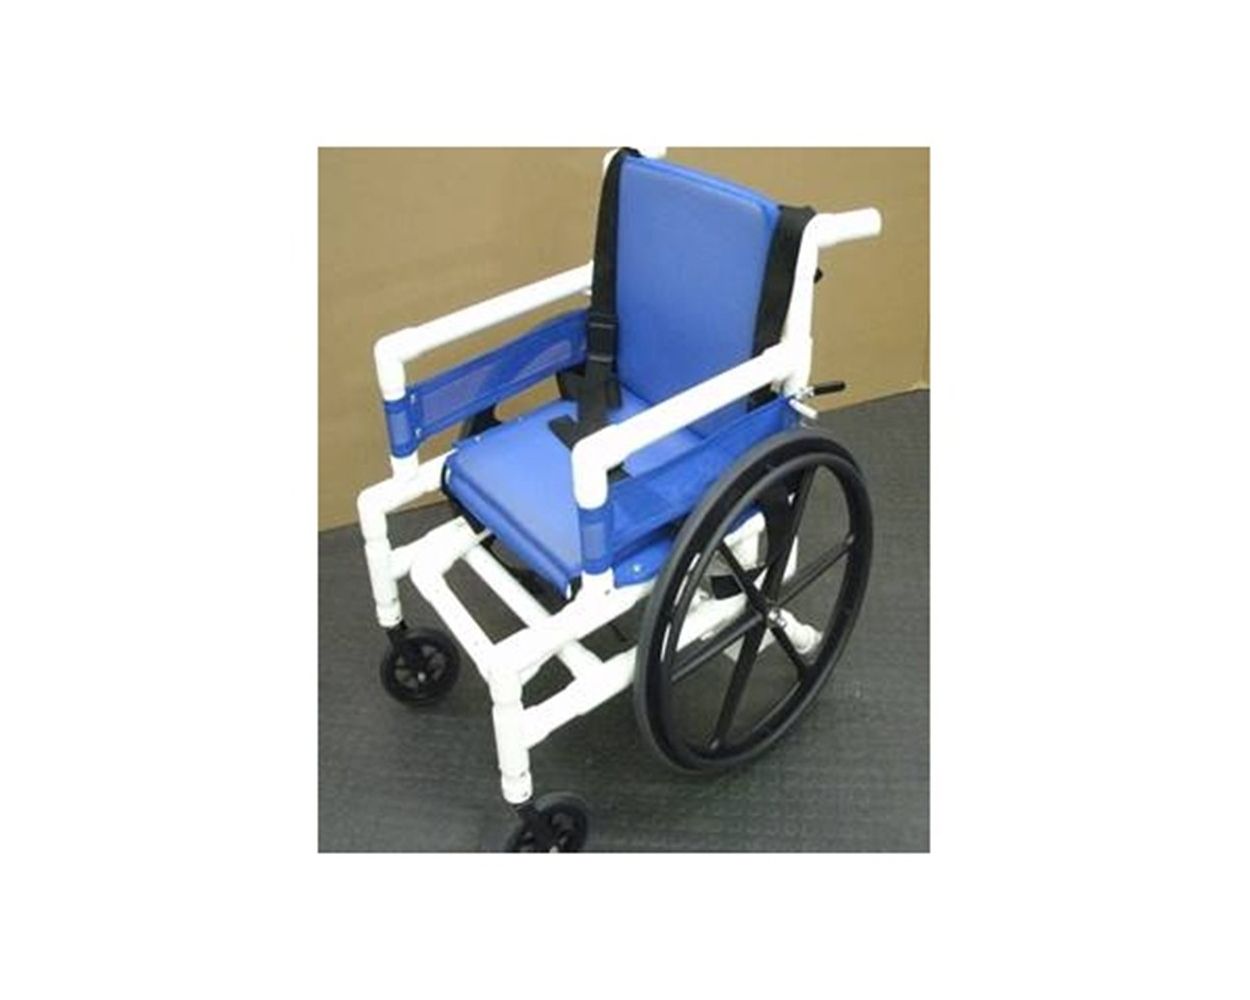 Aquatrek Reduced Seat Depth Wheelchair